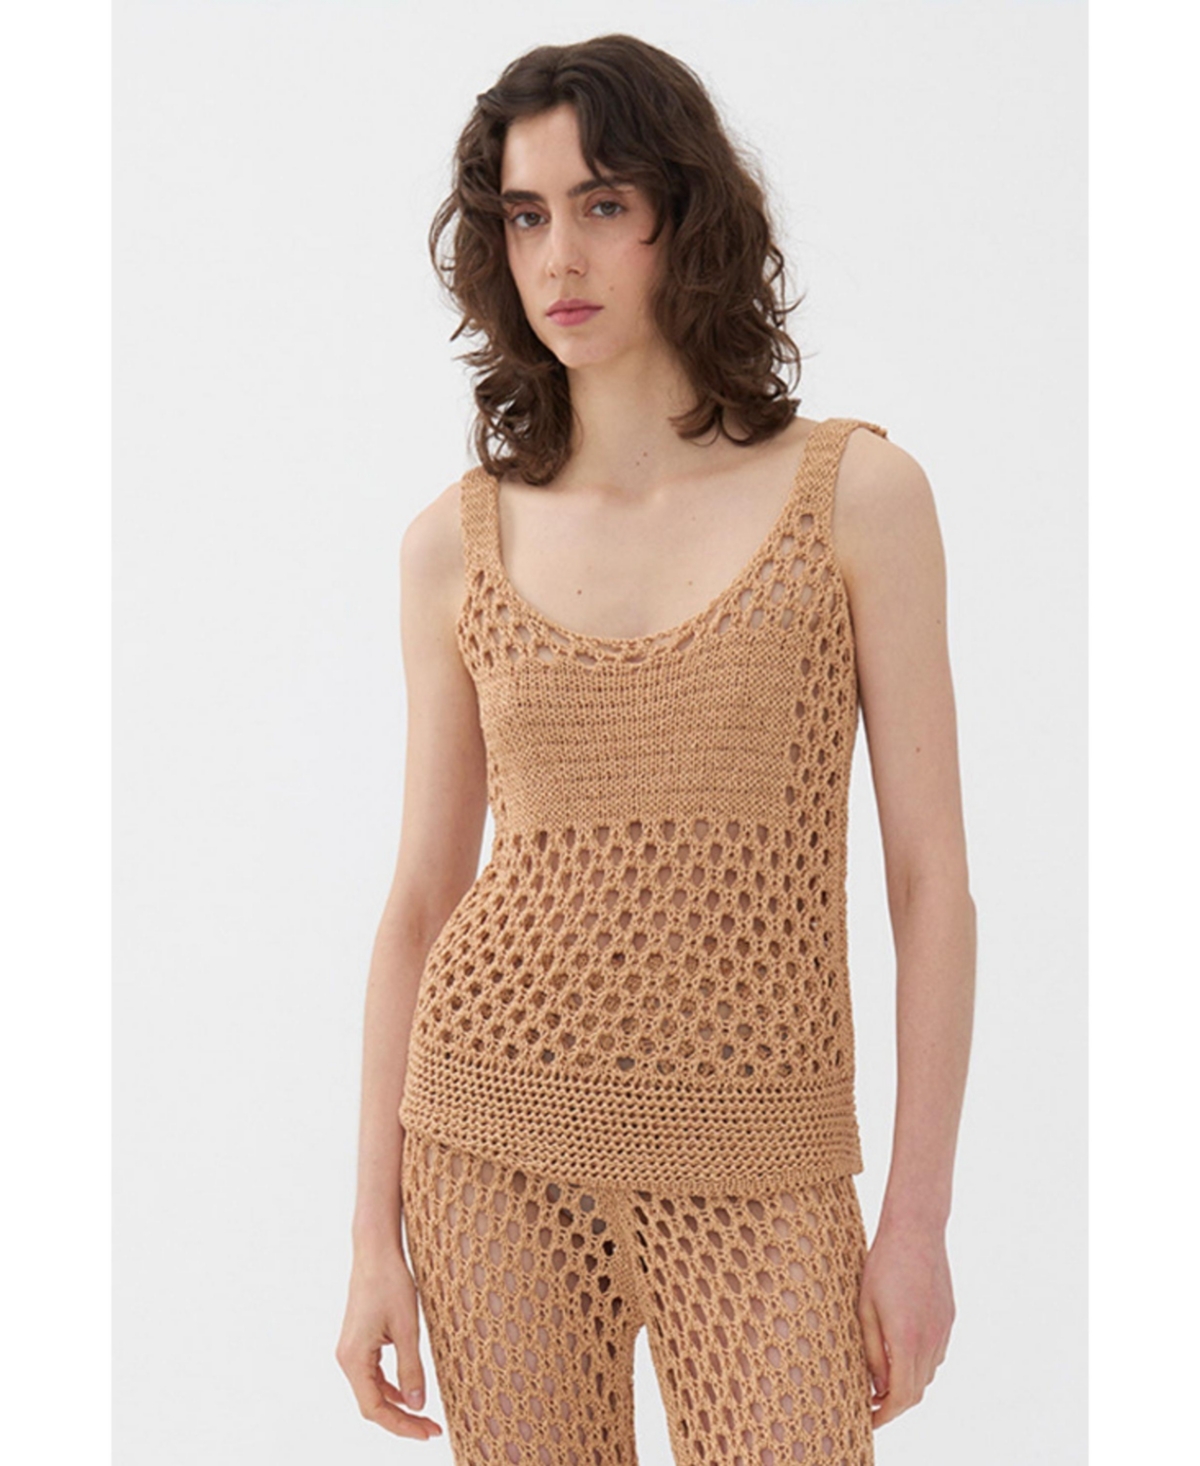 Women's Mesh Knit Top - Medium brown